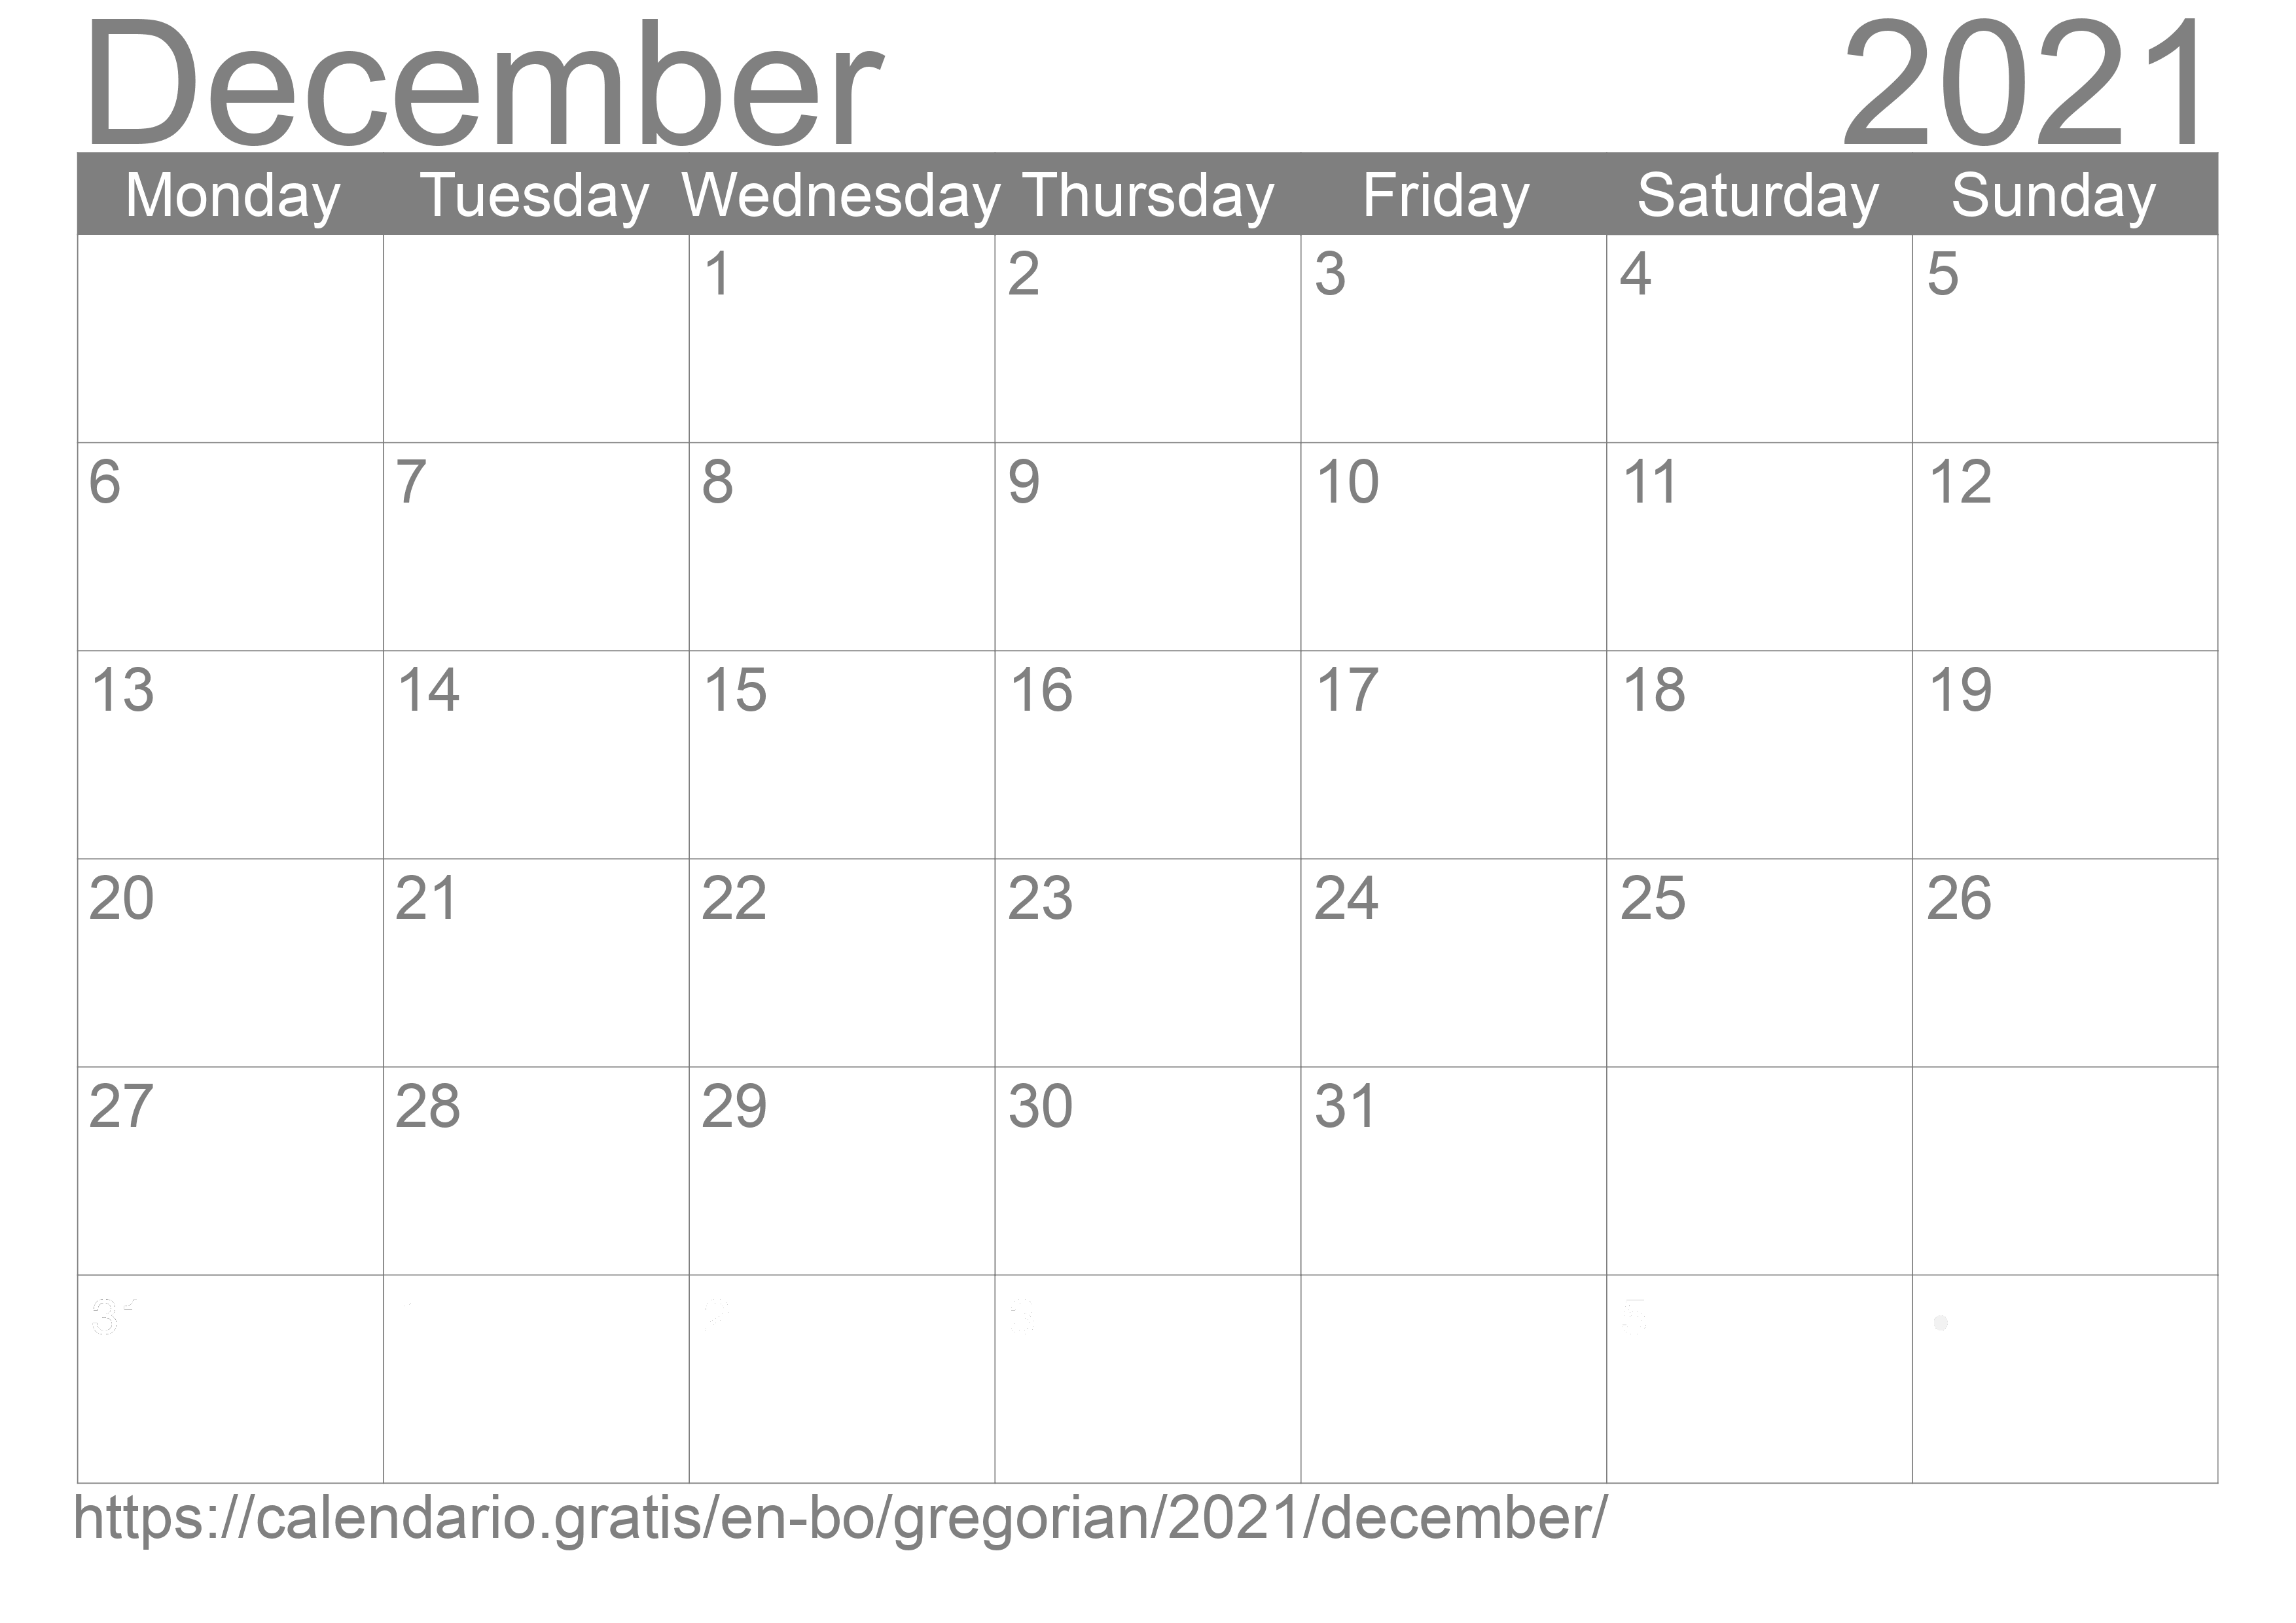 Calendar December 2021 to print